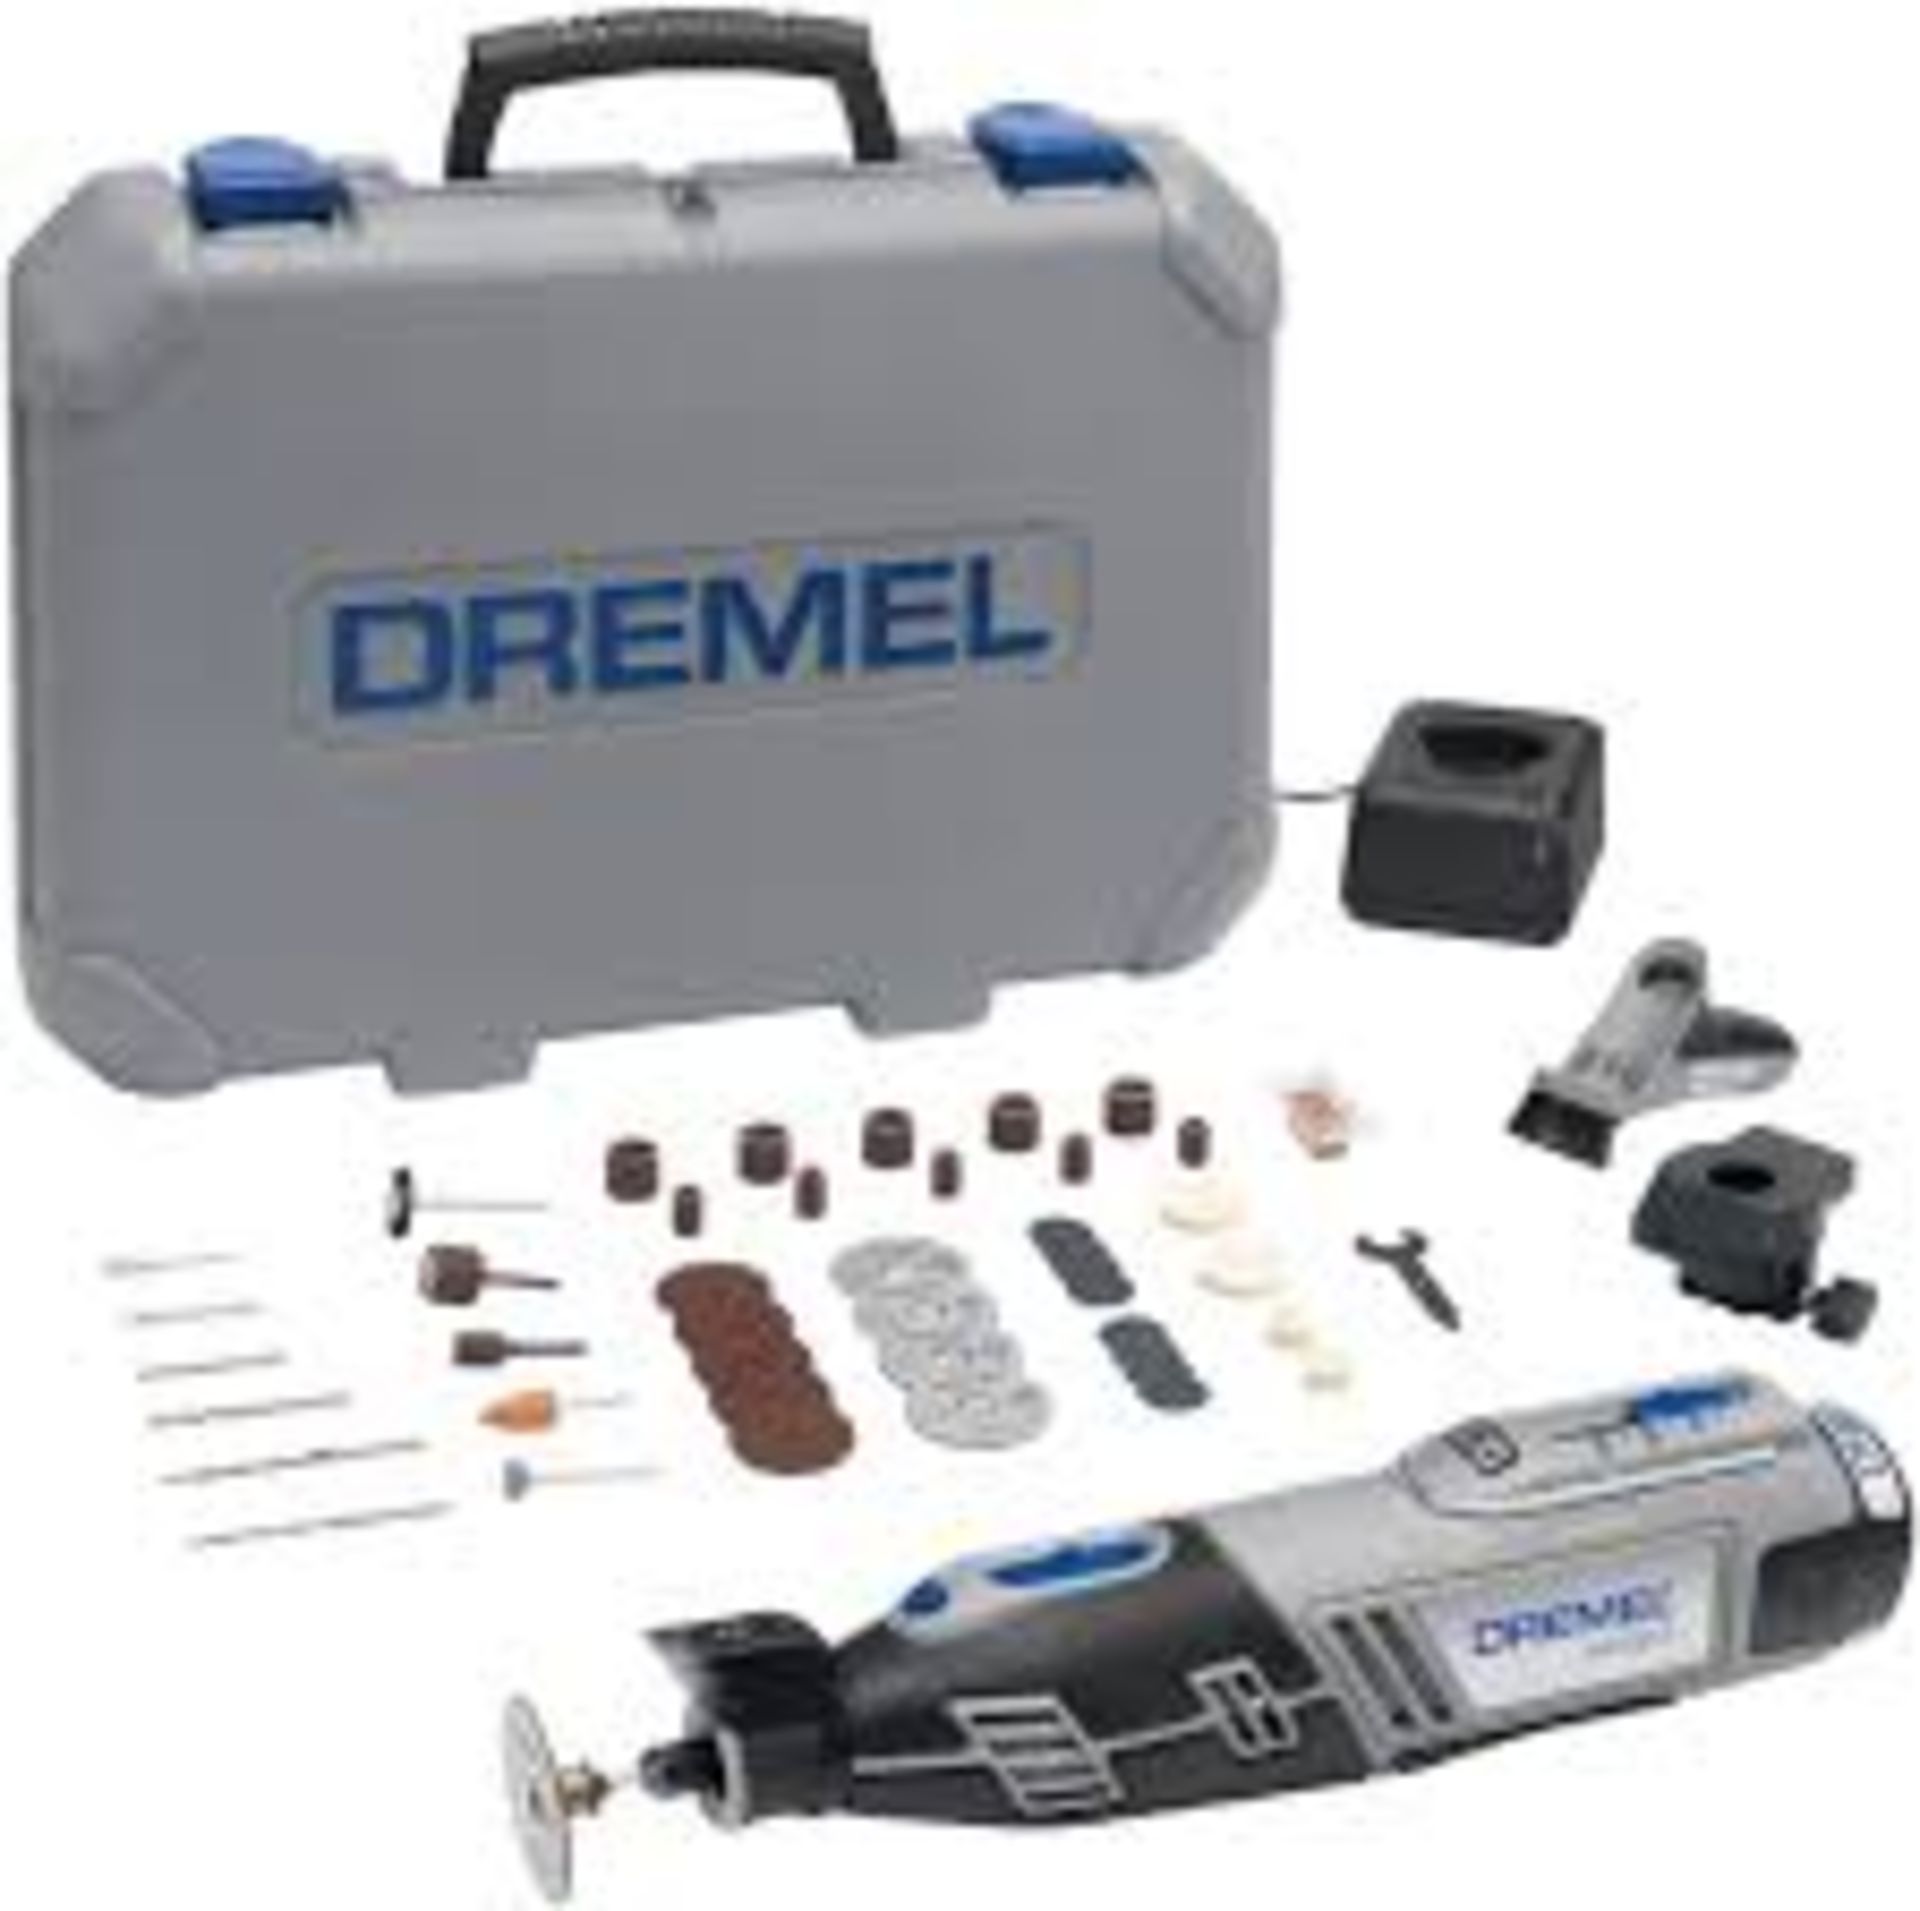 Dremel 8220-2 45 Piece 12V Rotary Multi-Tool Kit. - PW.